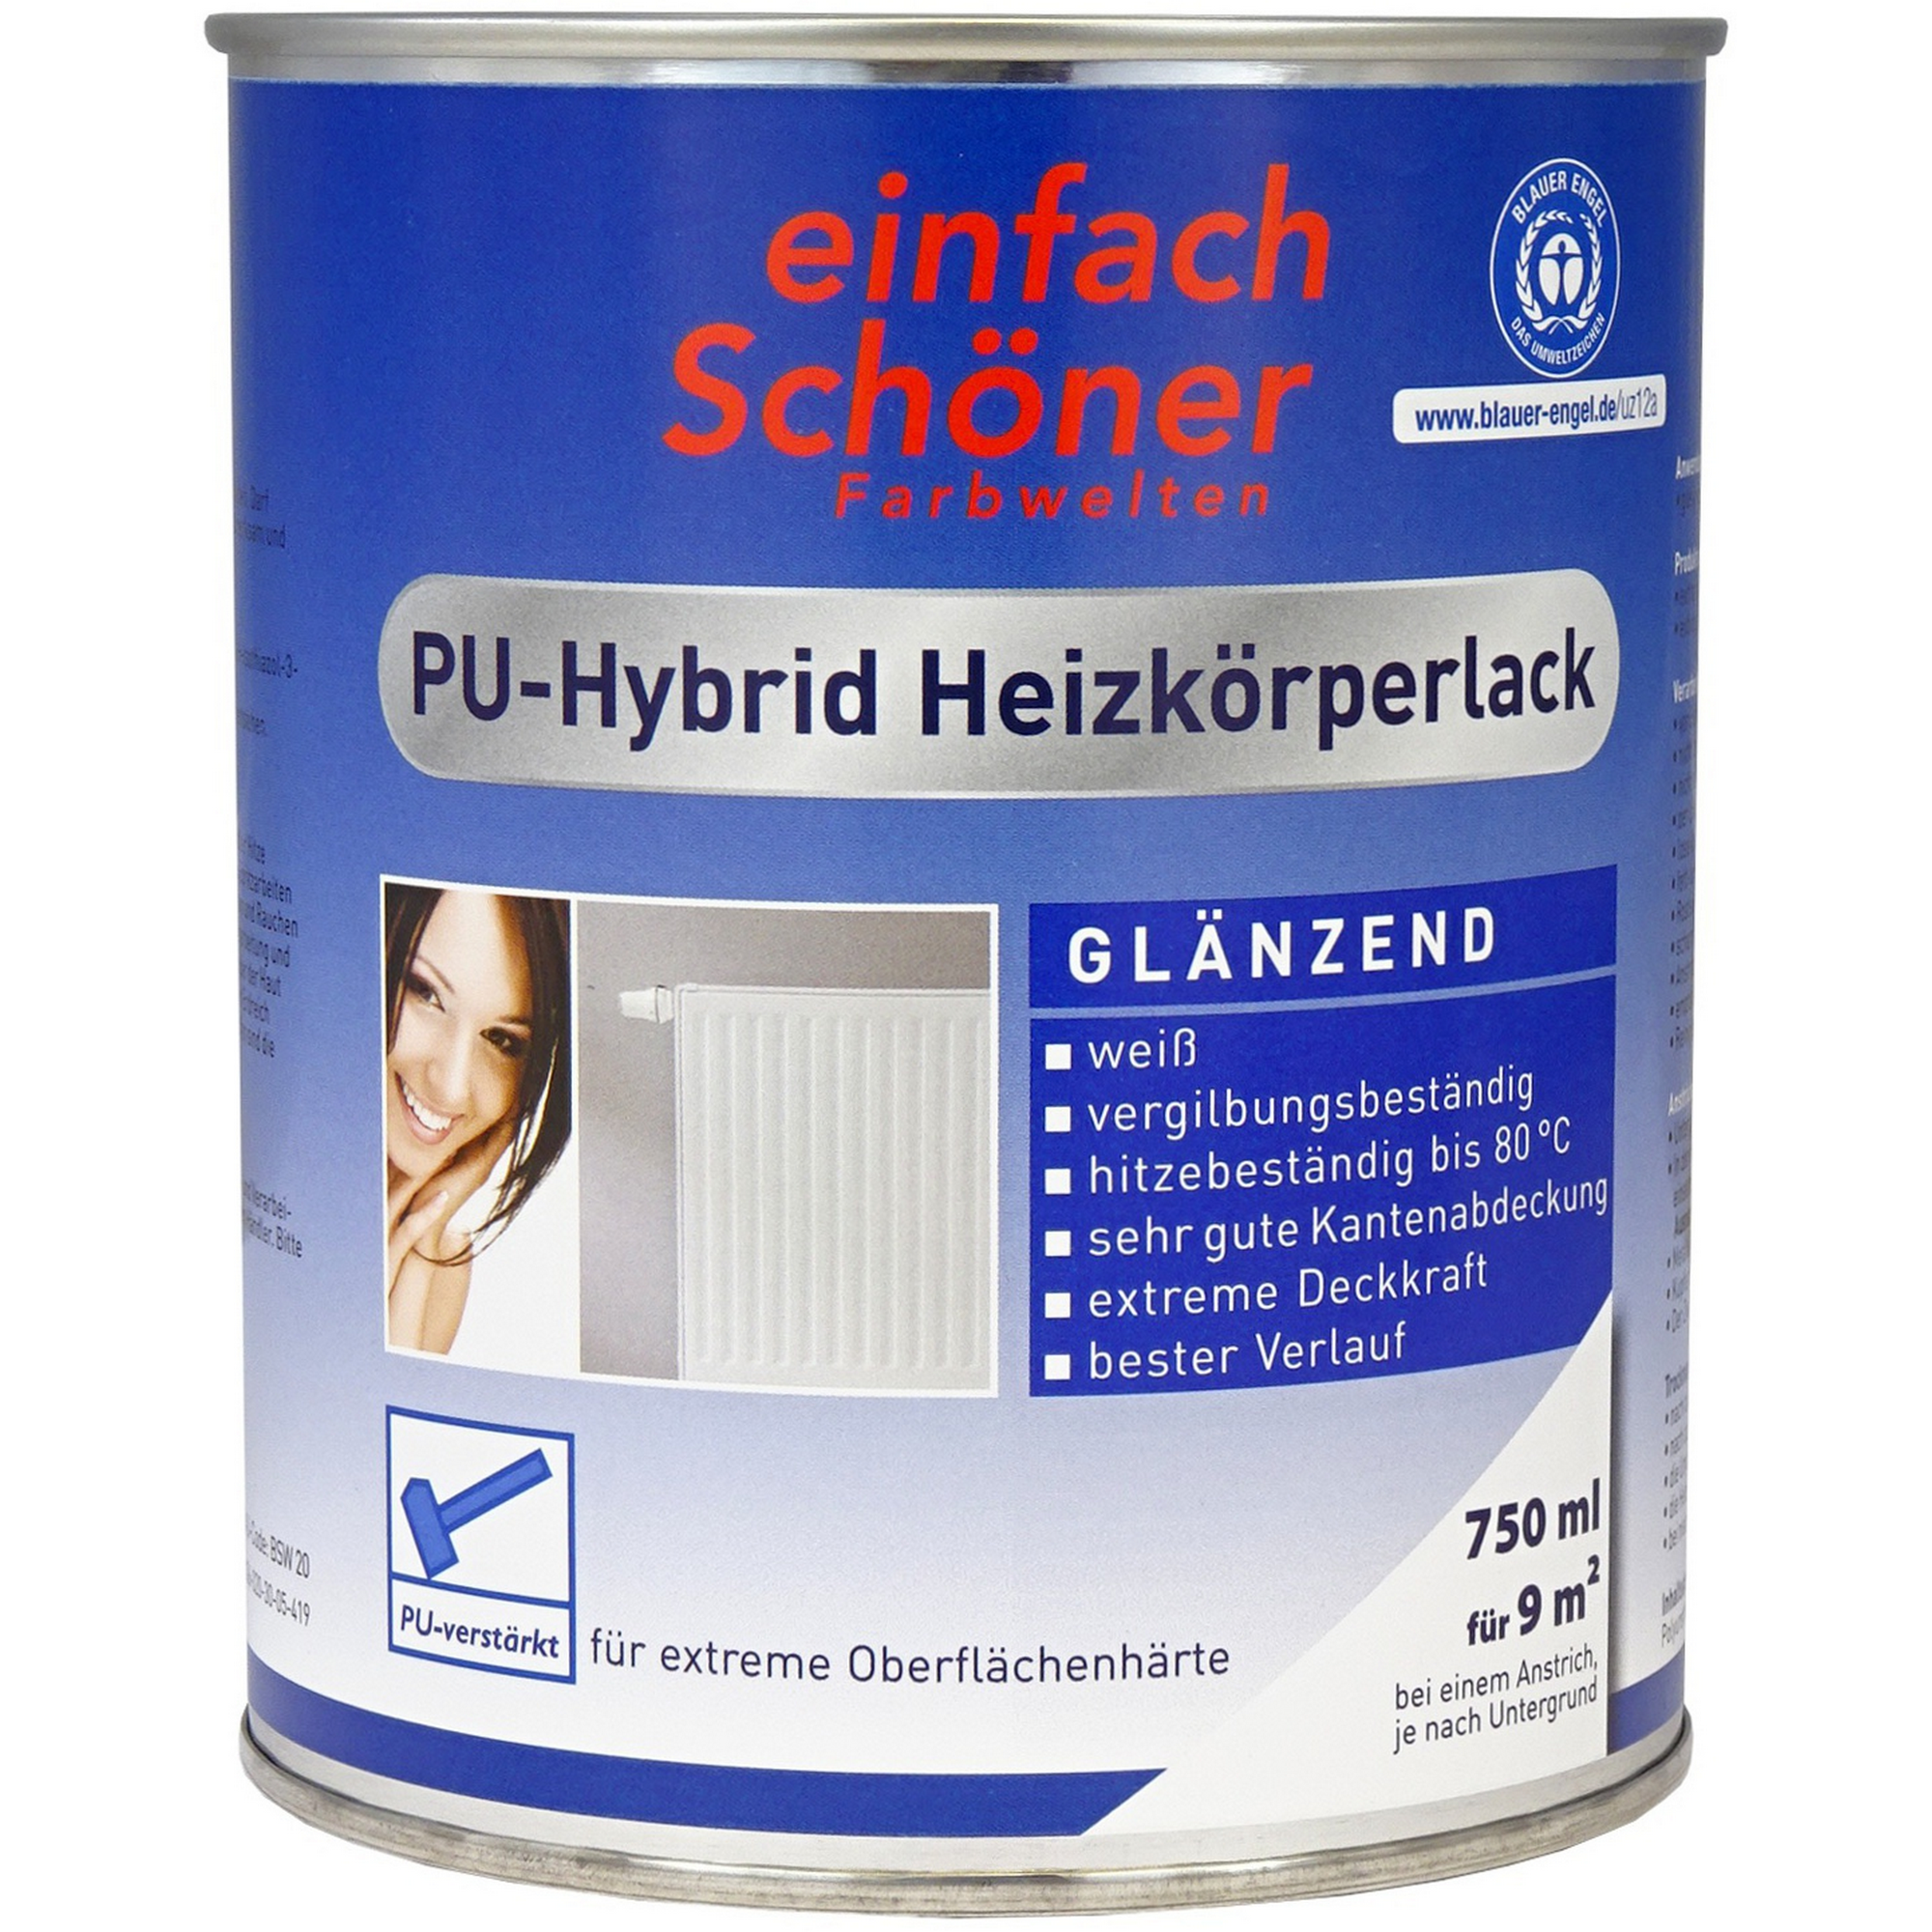 PU-Hybrid Heizkörperlack glänzend 750 ml + product picture